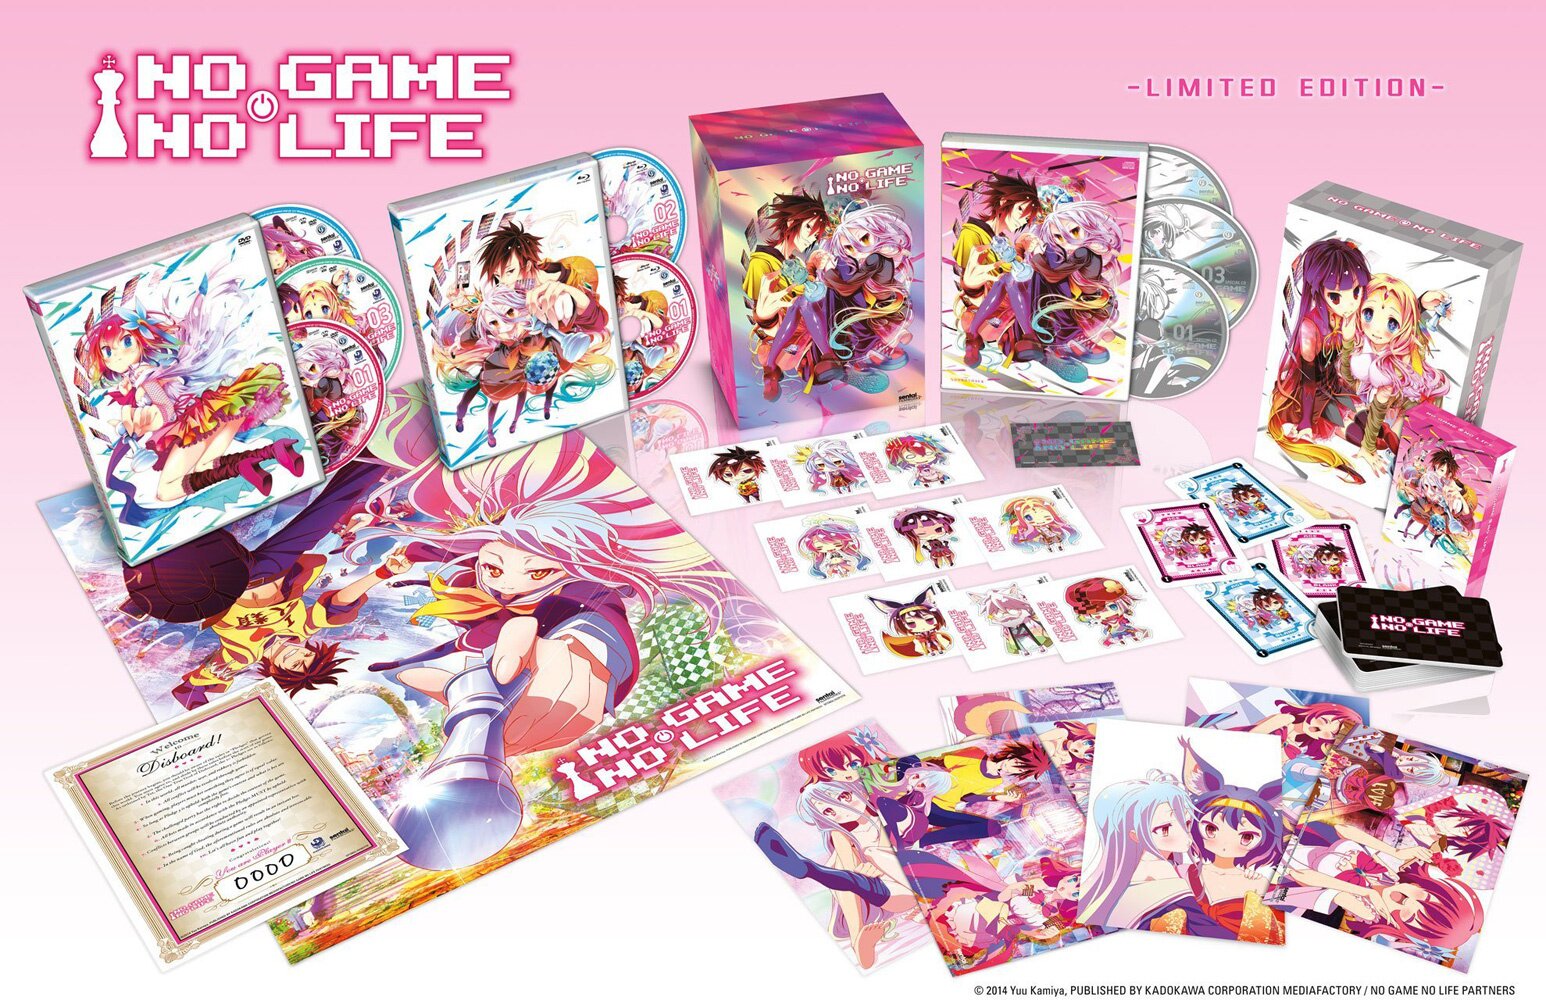 Japan Anime Movie No Game No Life Zero Blu-ray Box Limited Edition